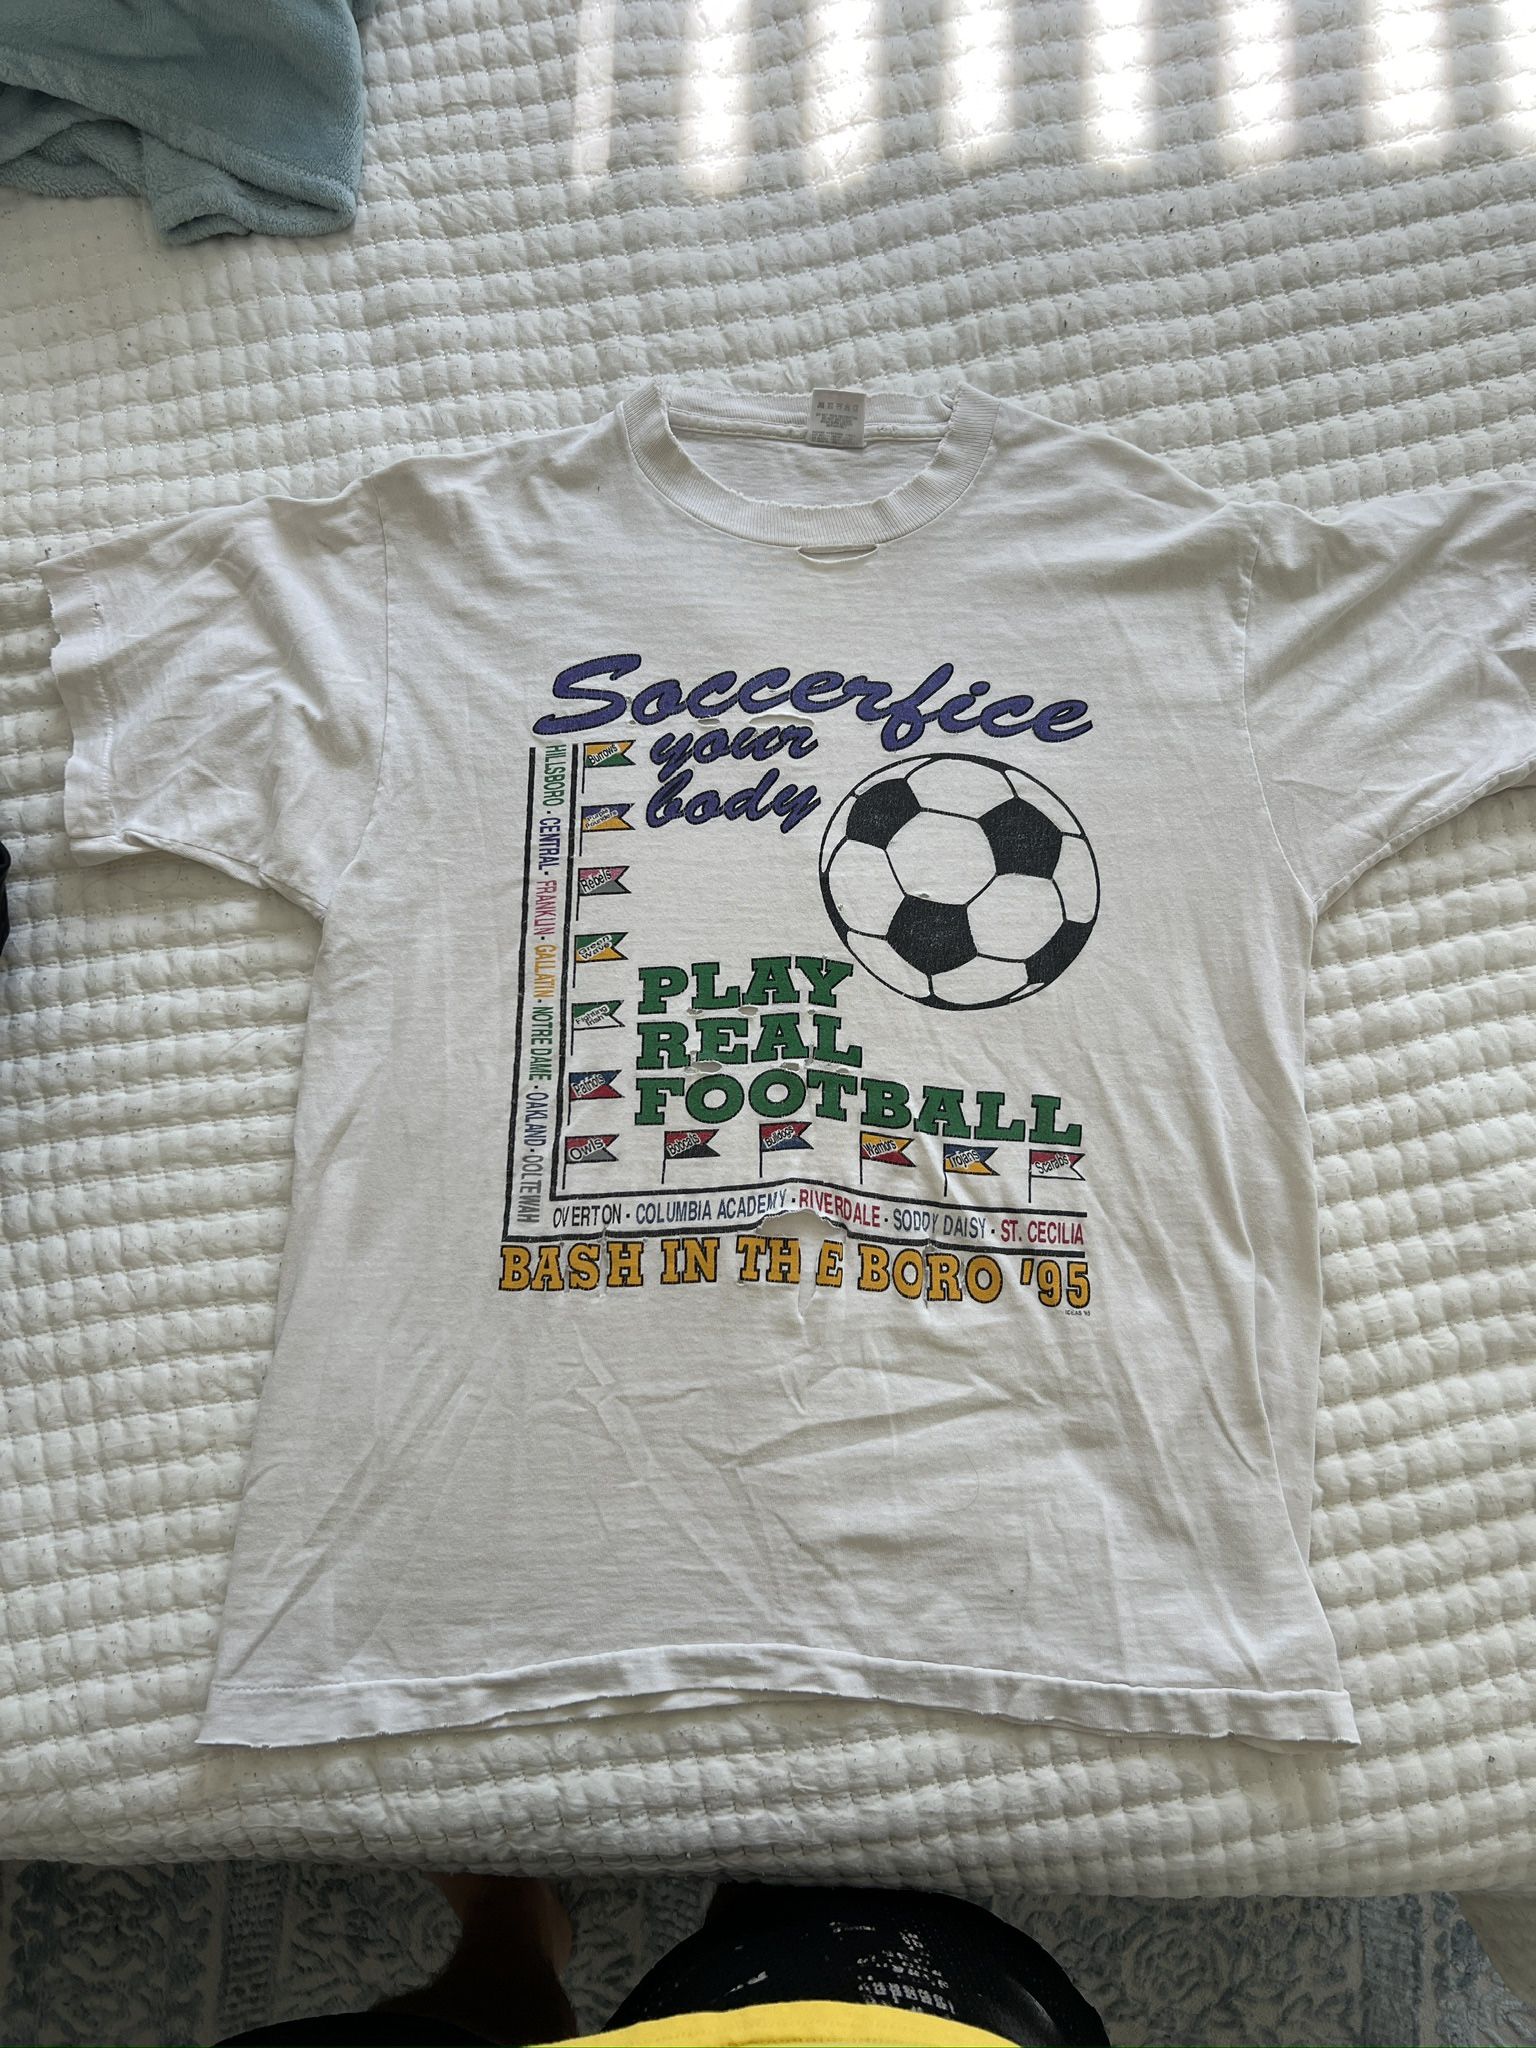 Vintage soccer shirt, white size large